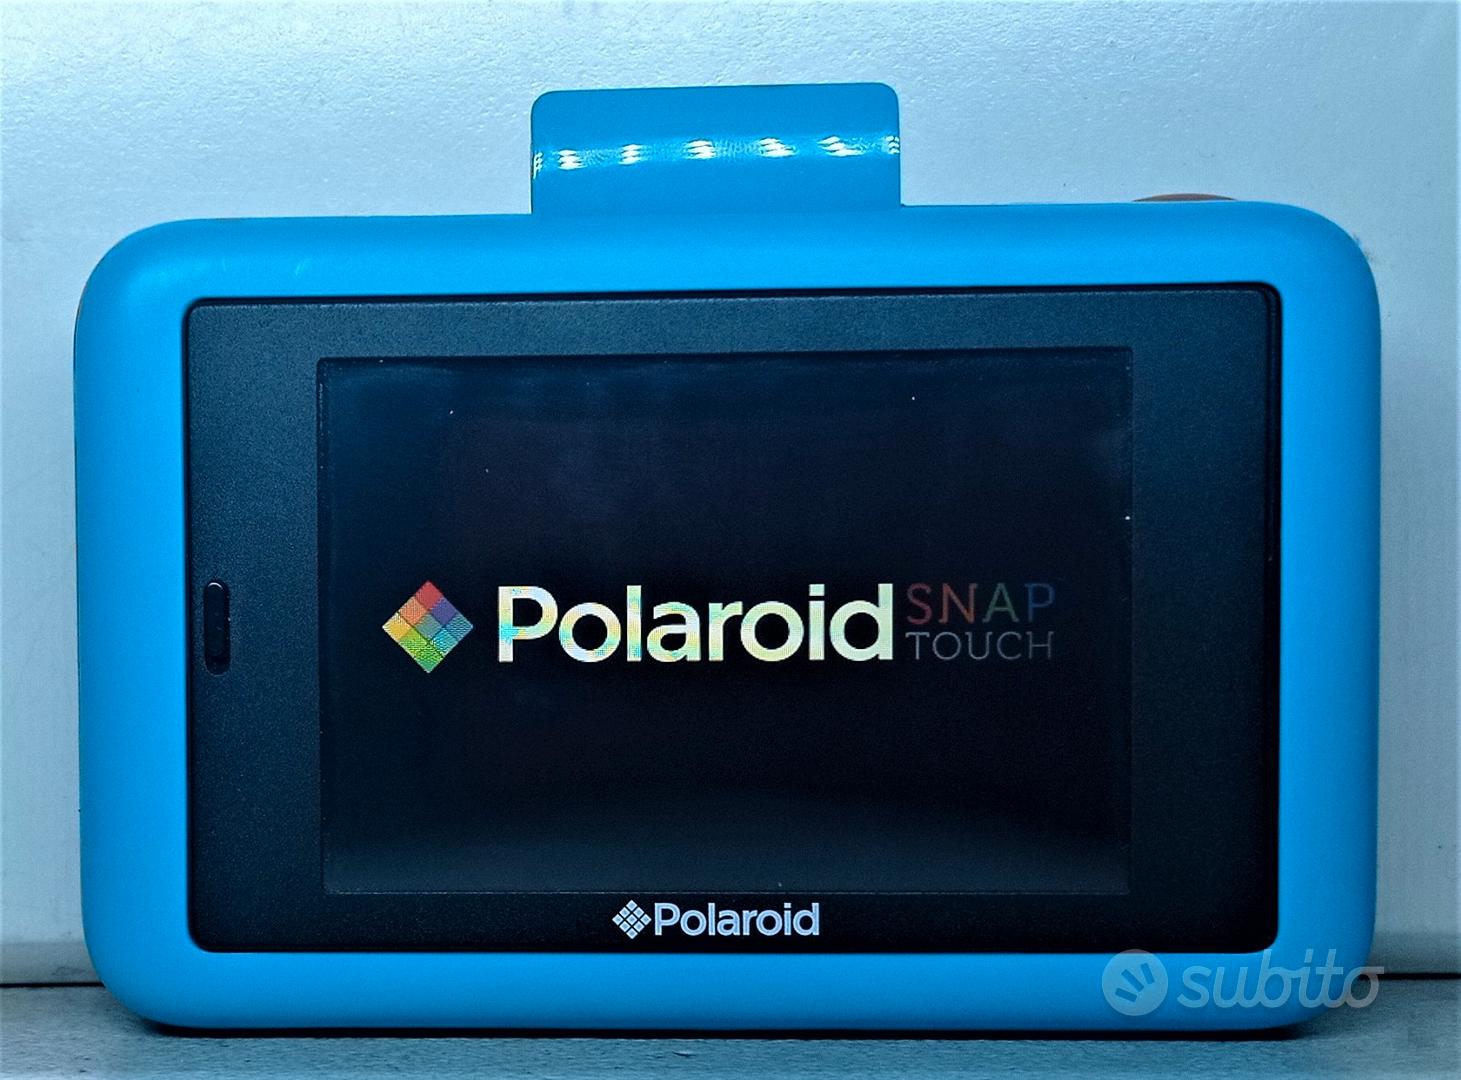 Polaroid Snap Touch azzurra - Fotografia In vendita a Firenze